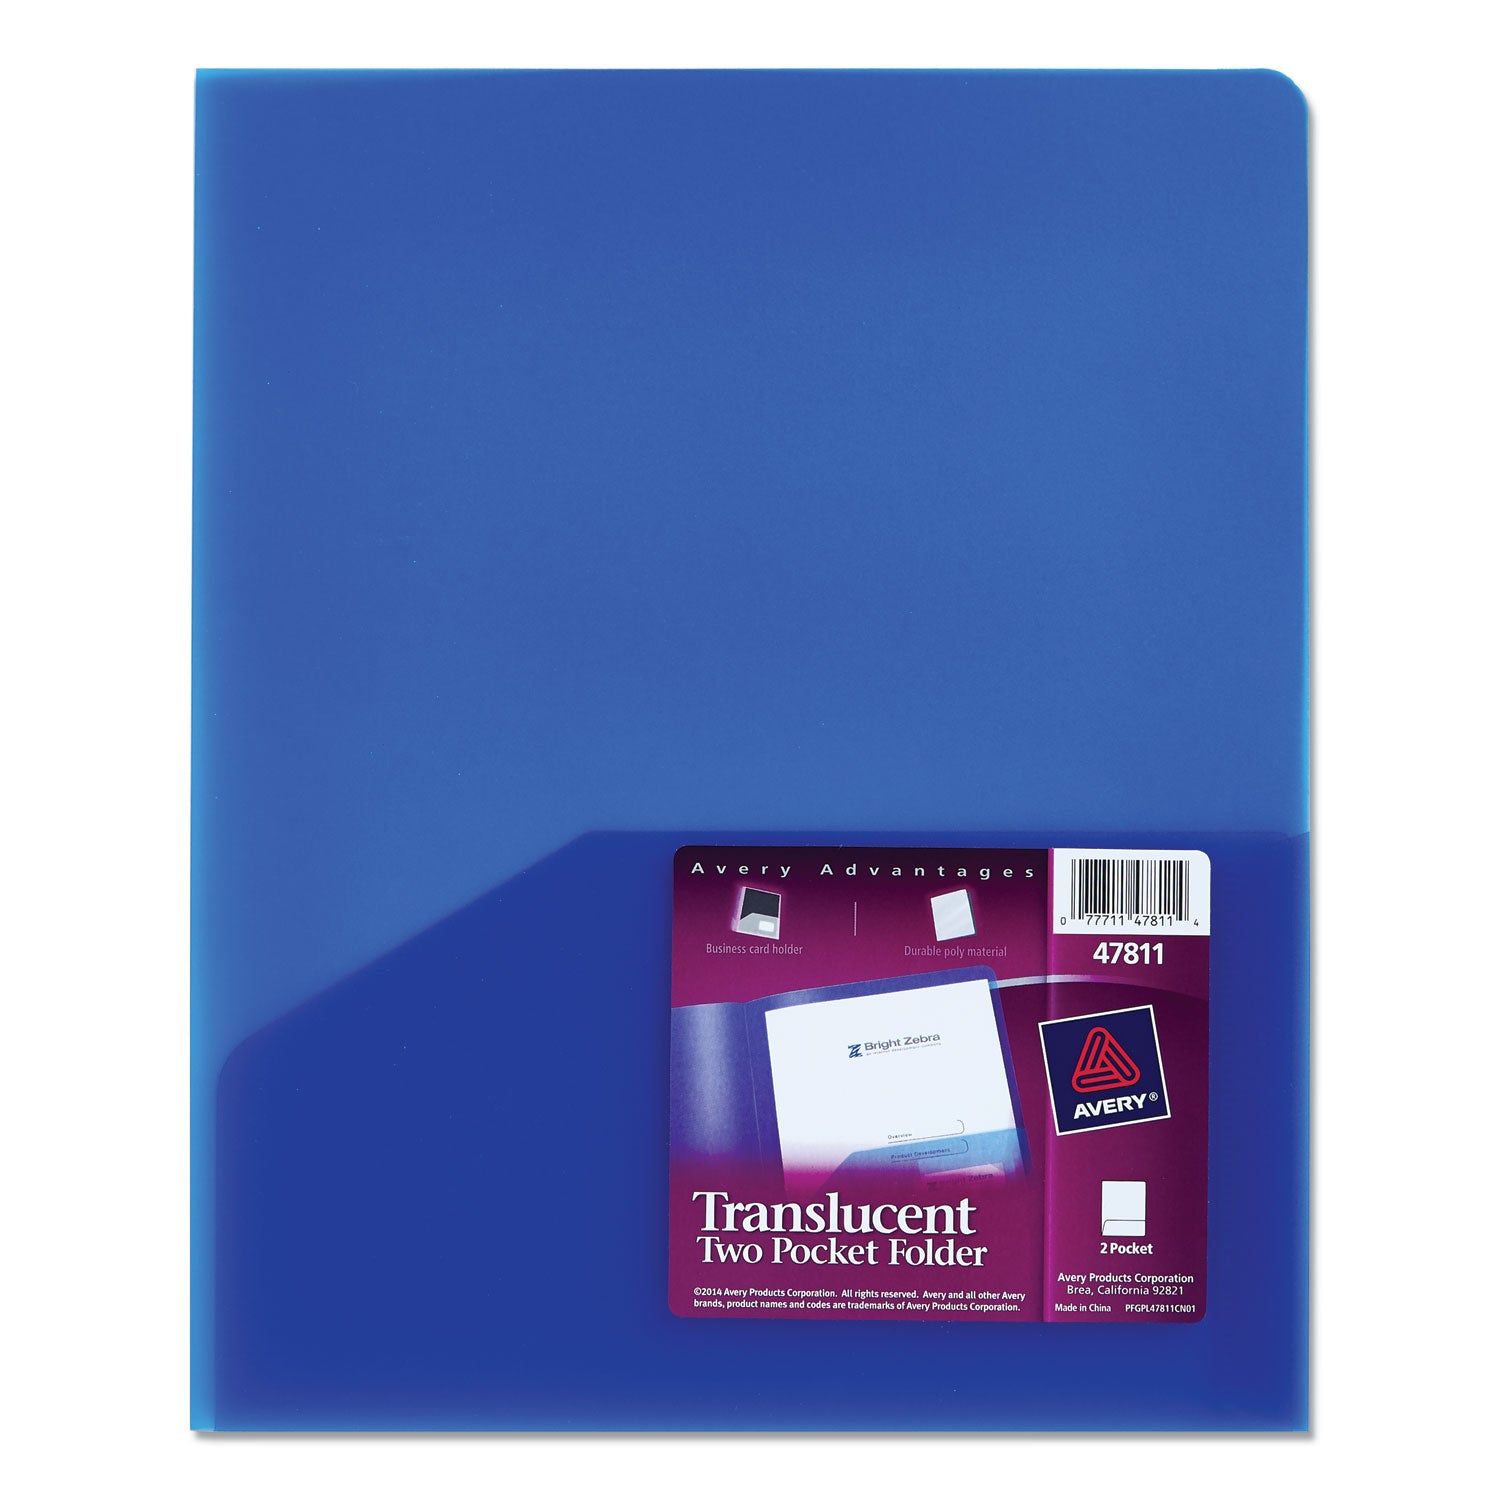 Plastic Two-Pocket Folder, 20-Sheet Capacity, 11 x 8.5, Translucent Blue - 